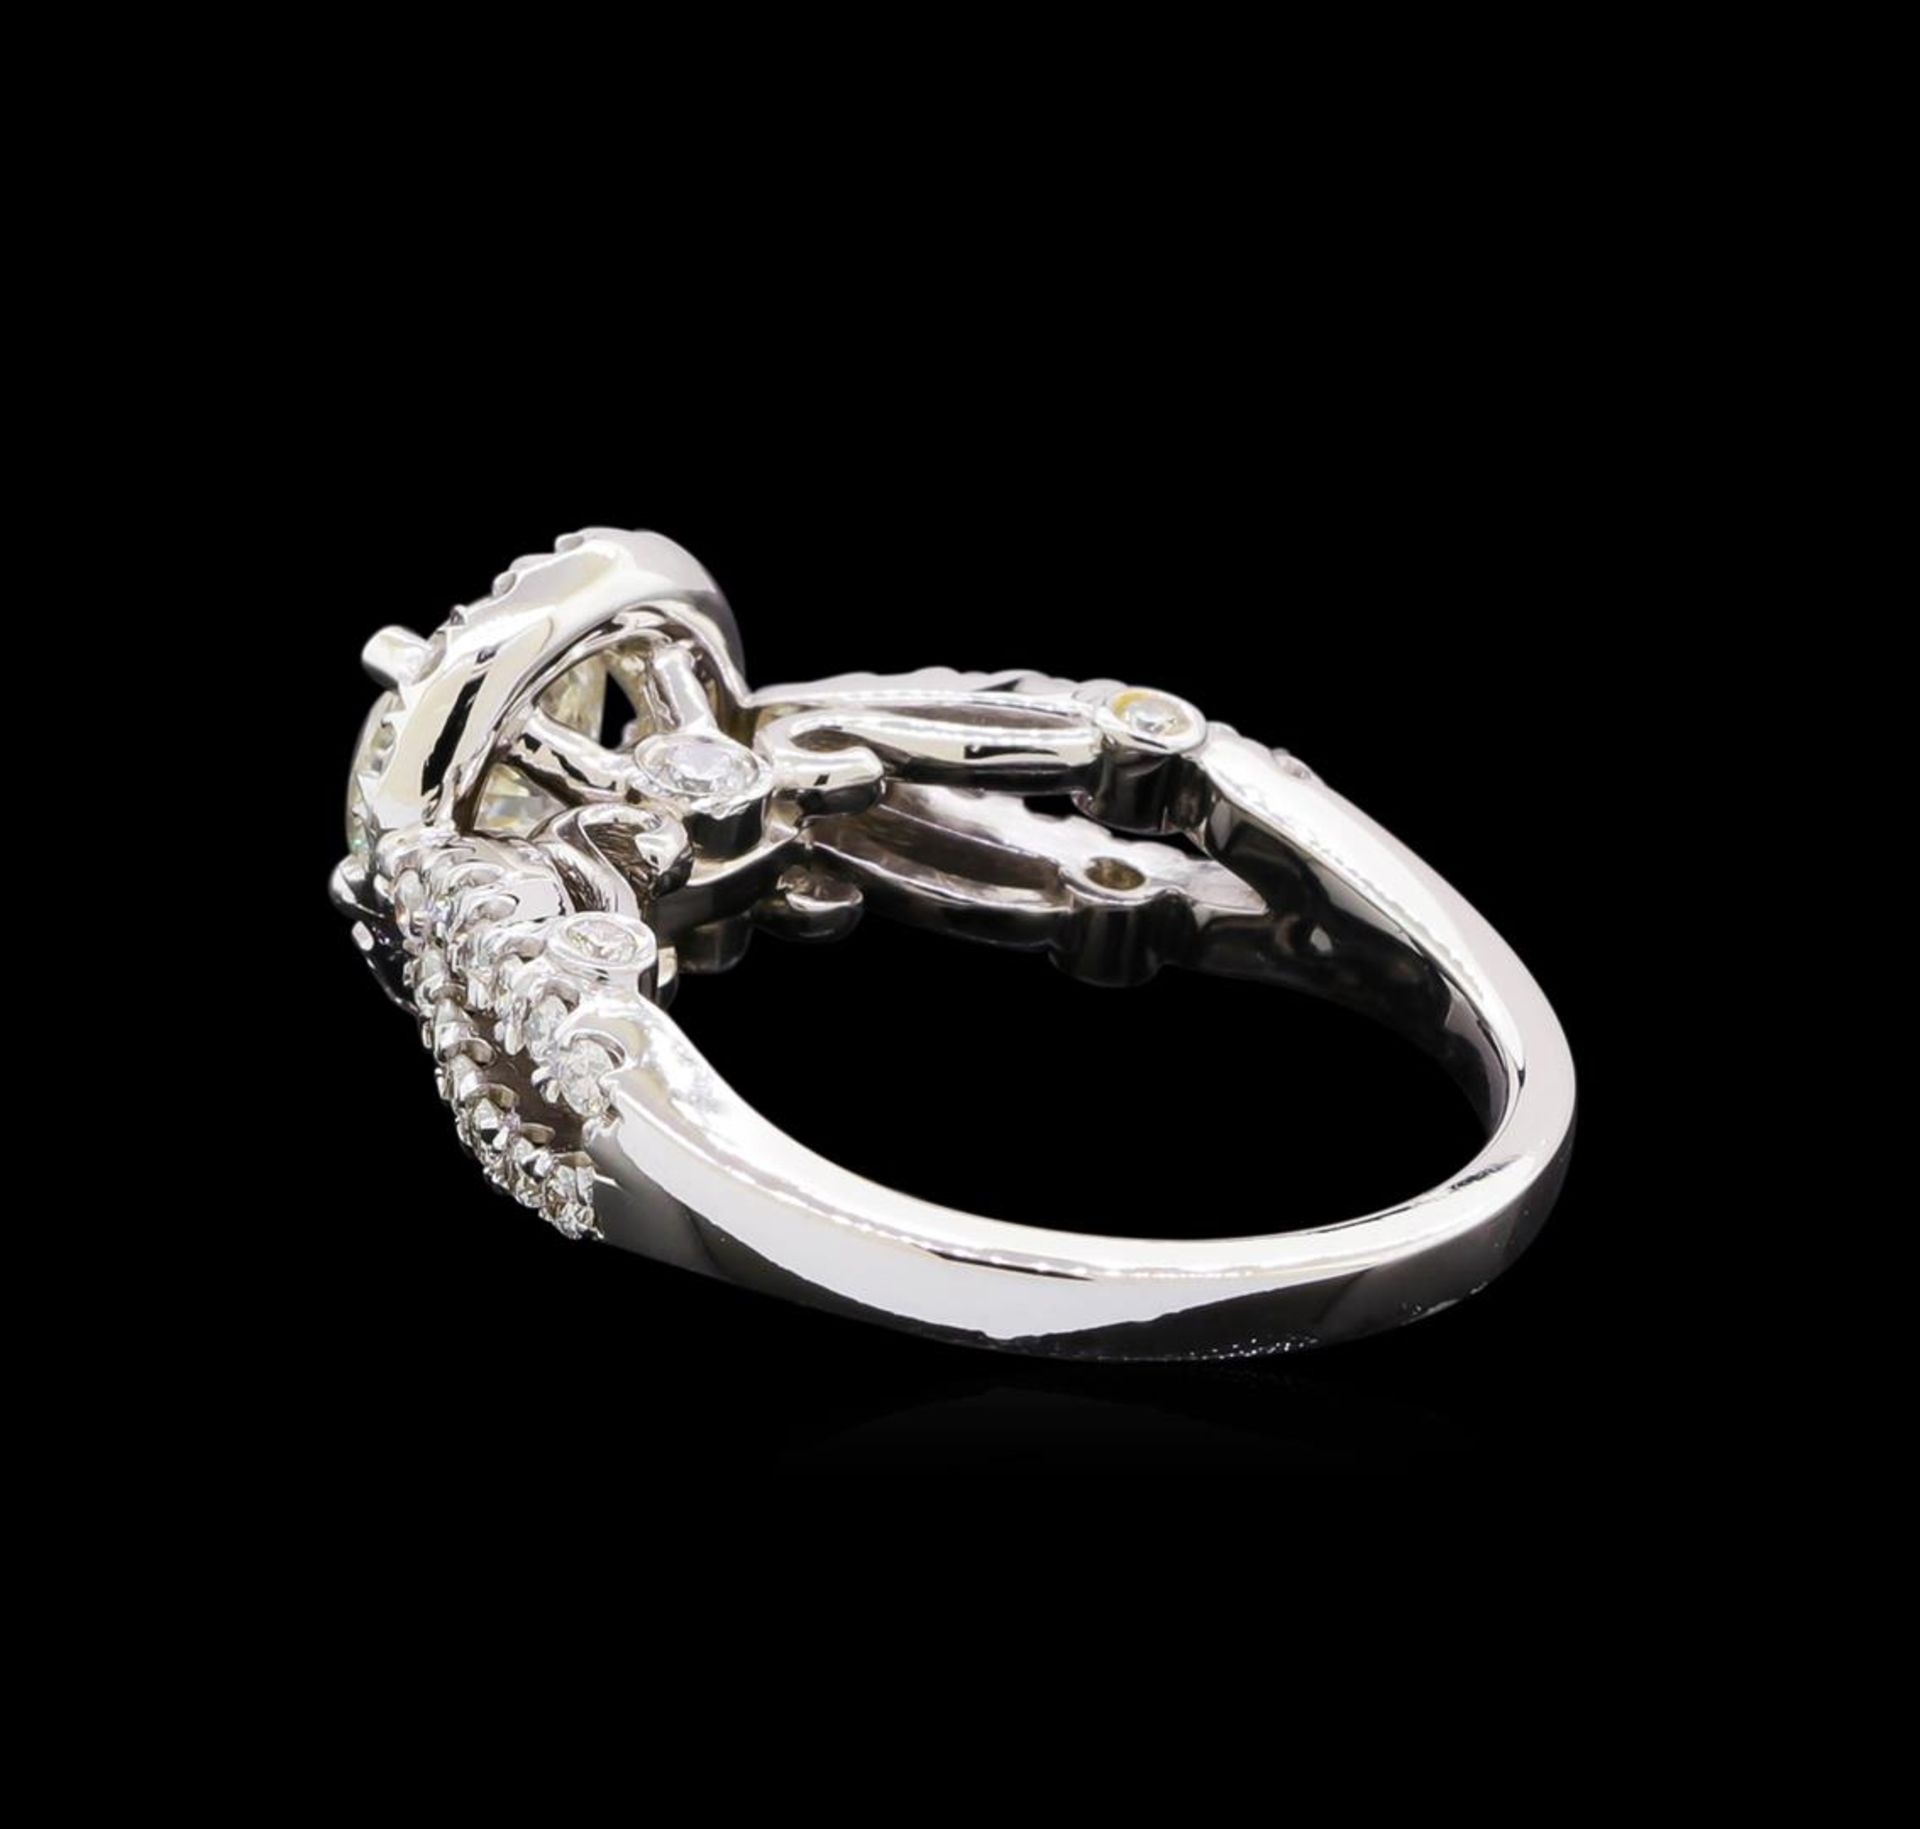 1.85 ctw Diamond Ring - 14KT White Gold - Image 3 of 6